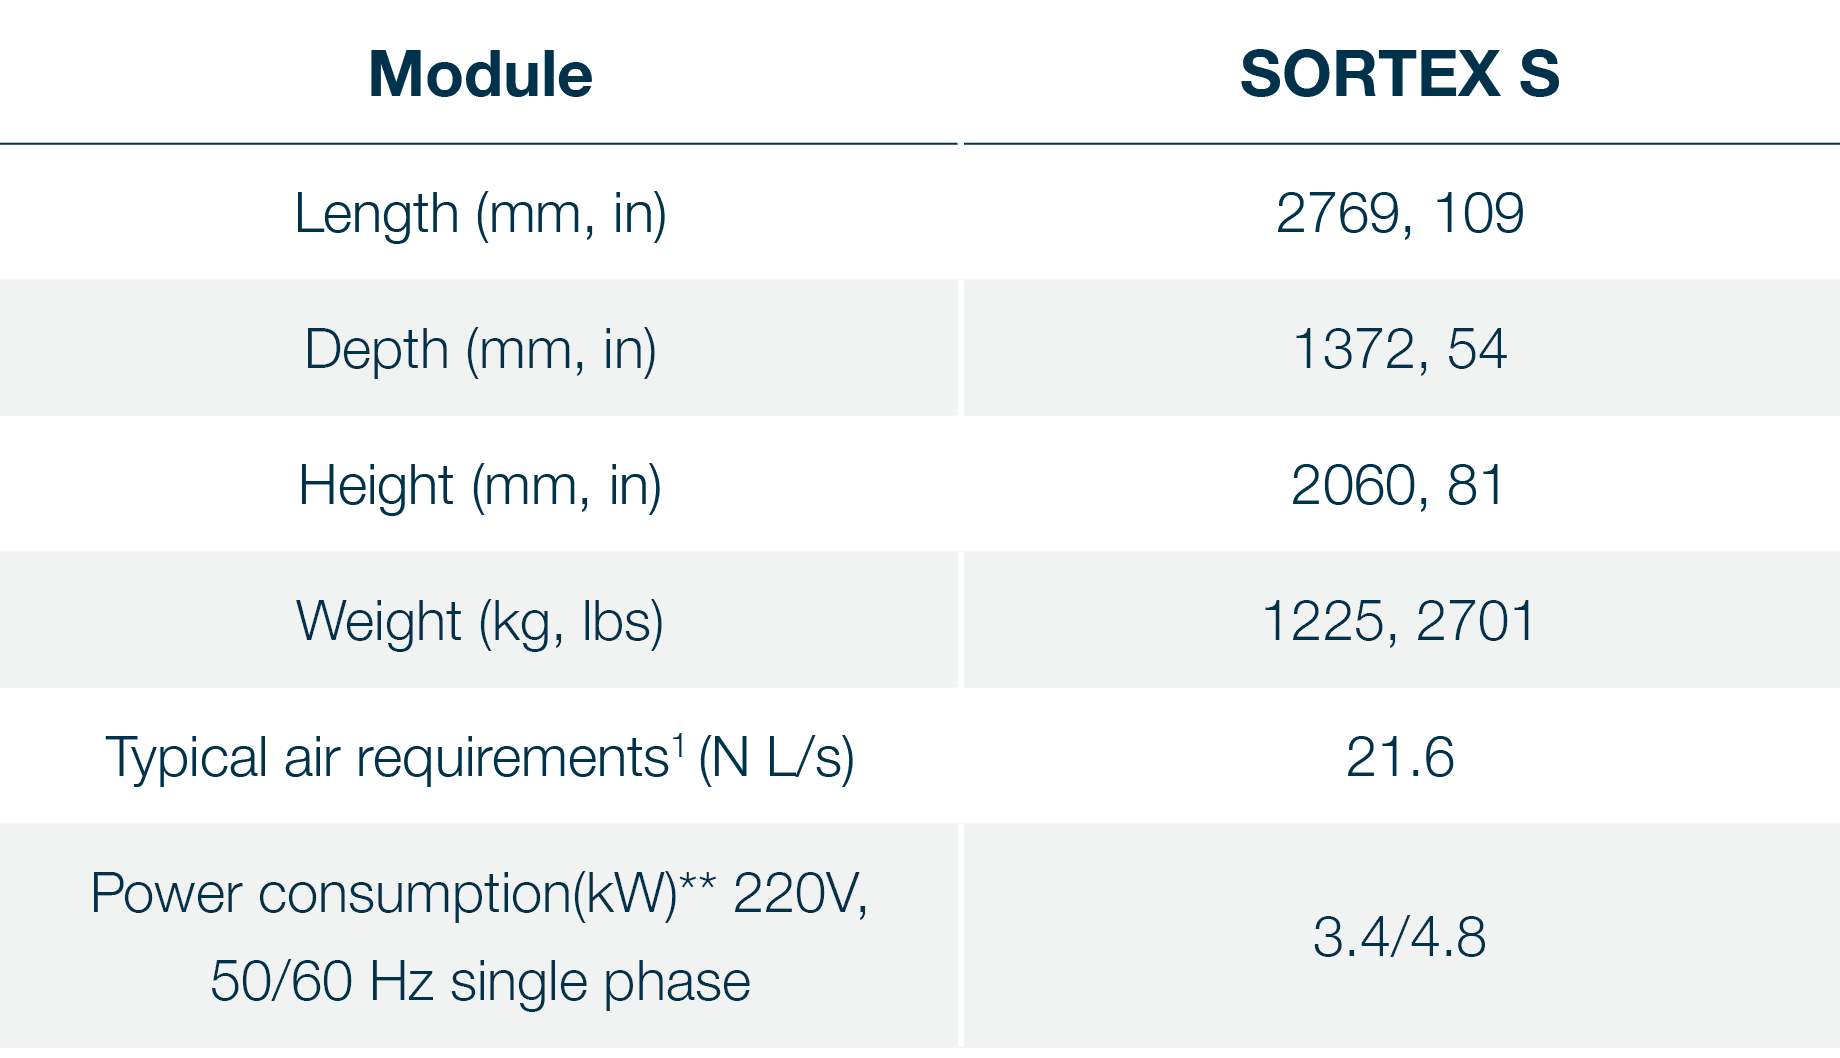 Module,SORTEX S,Length (mm, in),2769, 109,Depth (mm, in),1372, 54,Height (mm, in),2060, 81,Weight (kg, lbs),1225, 270   